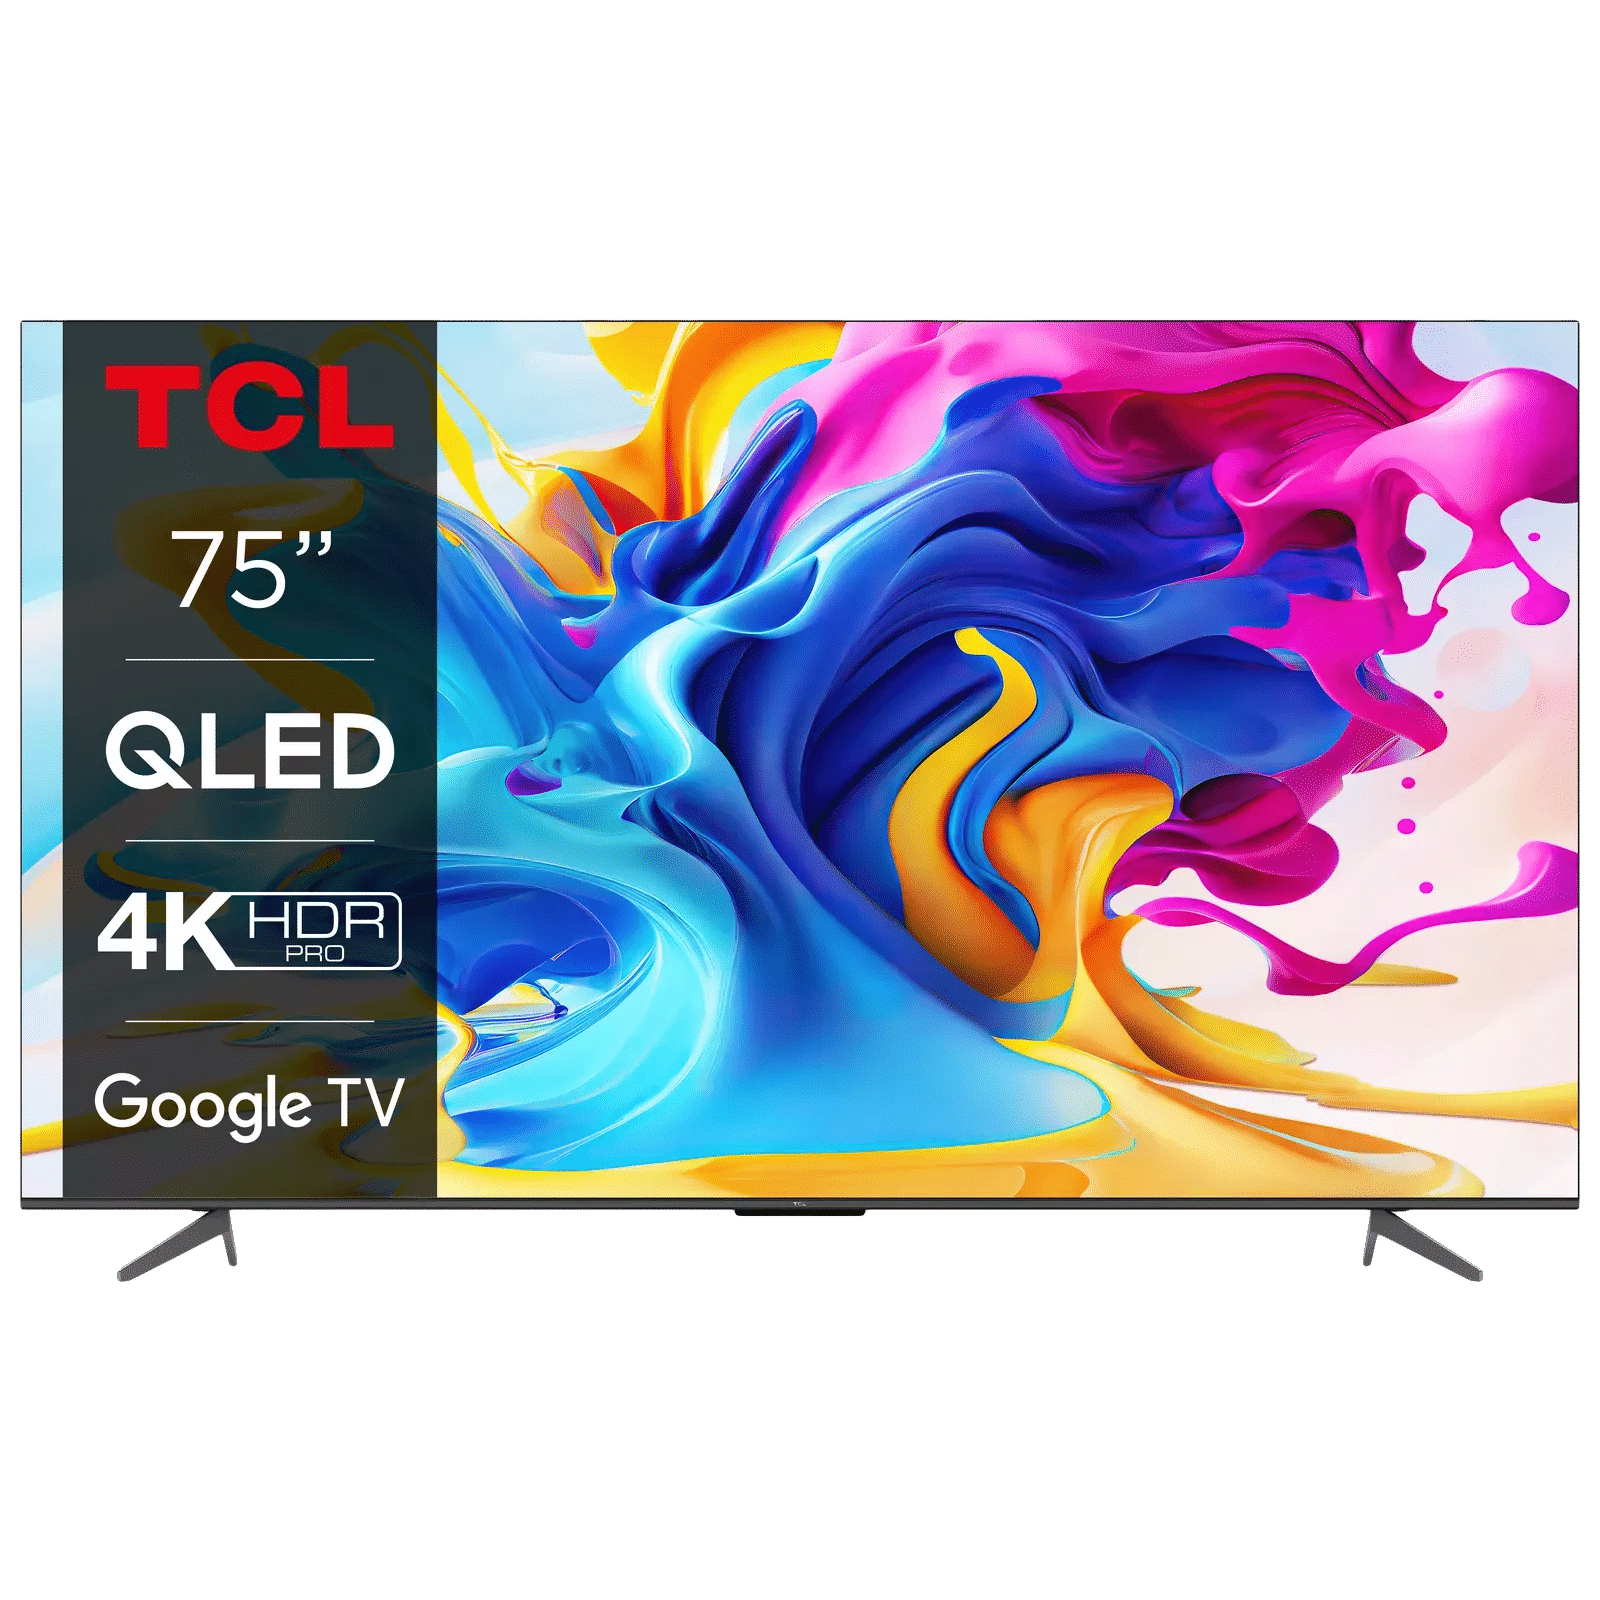 TCL 32 Class 3-Series FHD 1080p LED Smart Google TV  - Best Buy